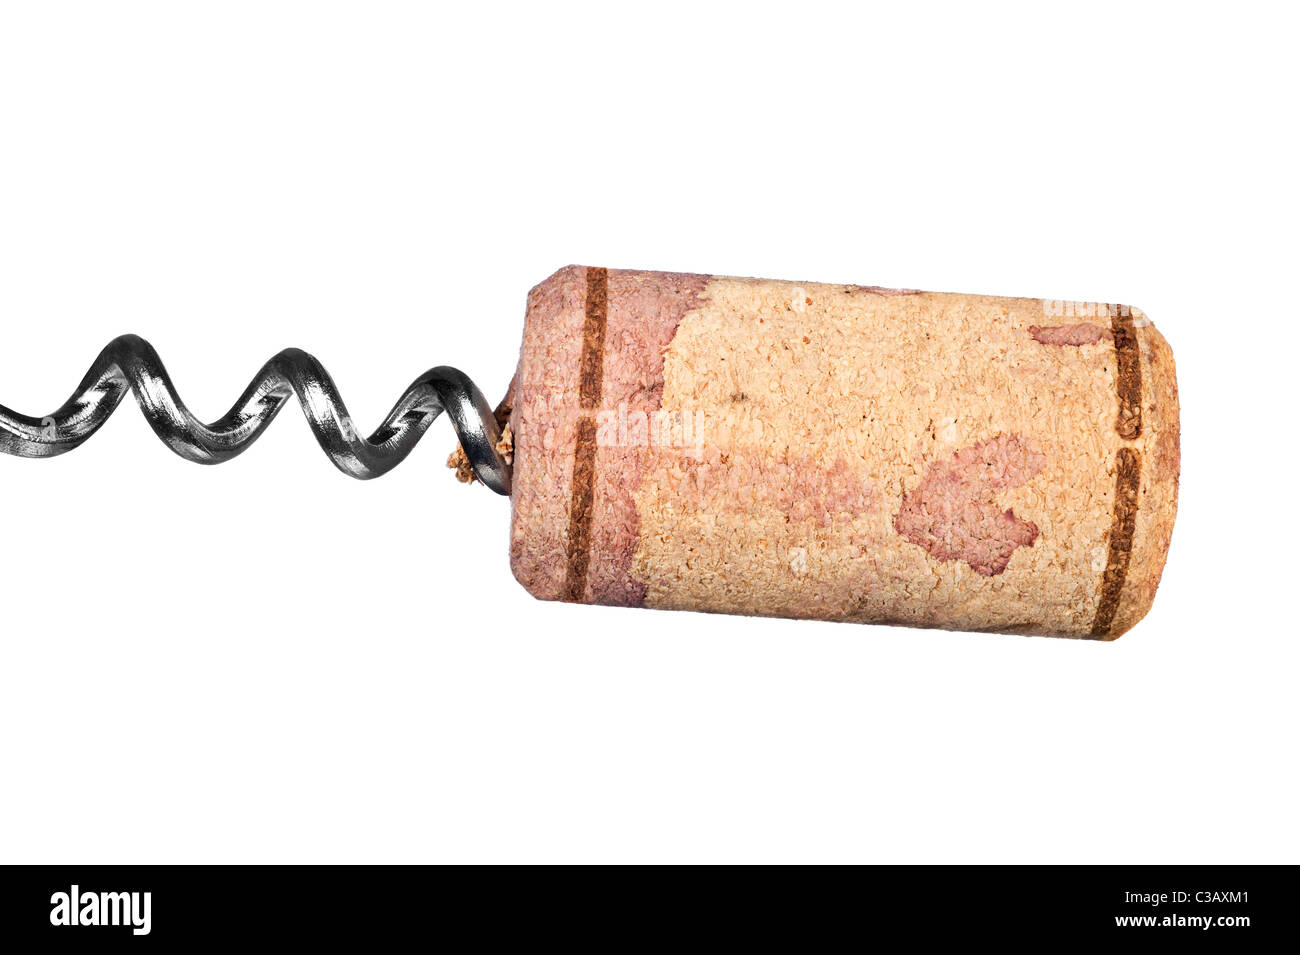 Un tire-bouchon en métal en spirale avec suppression cork torsadés en métal l'extracteur. Banque D'Images